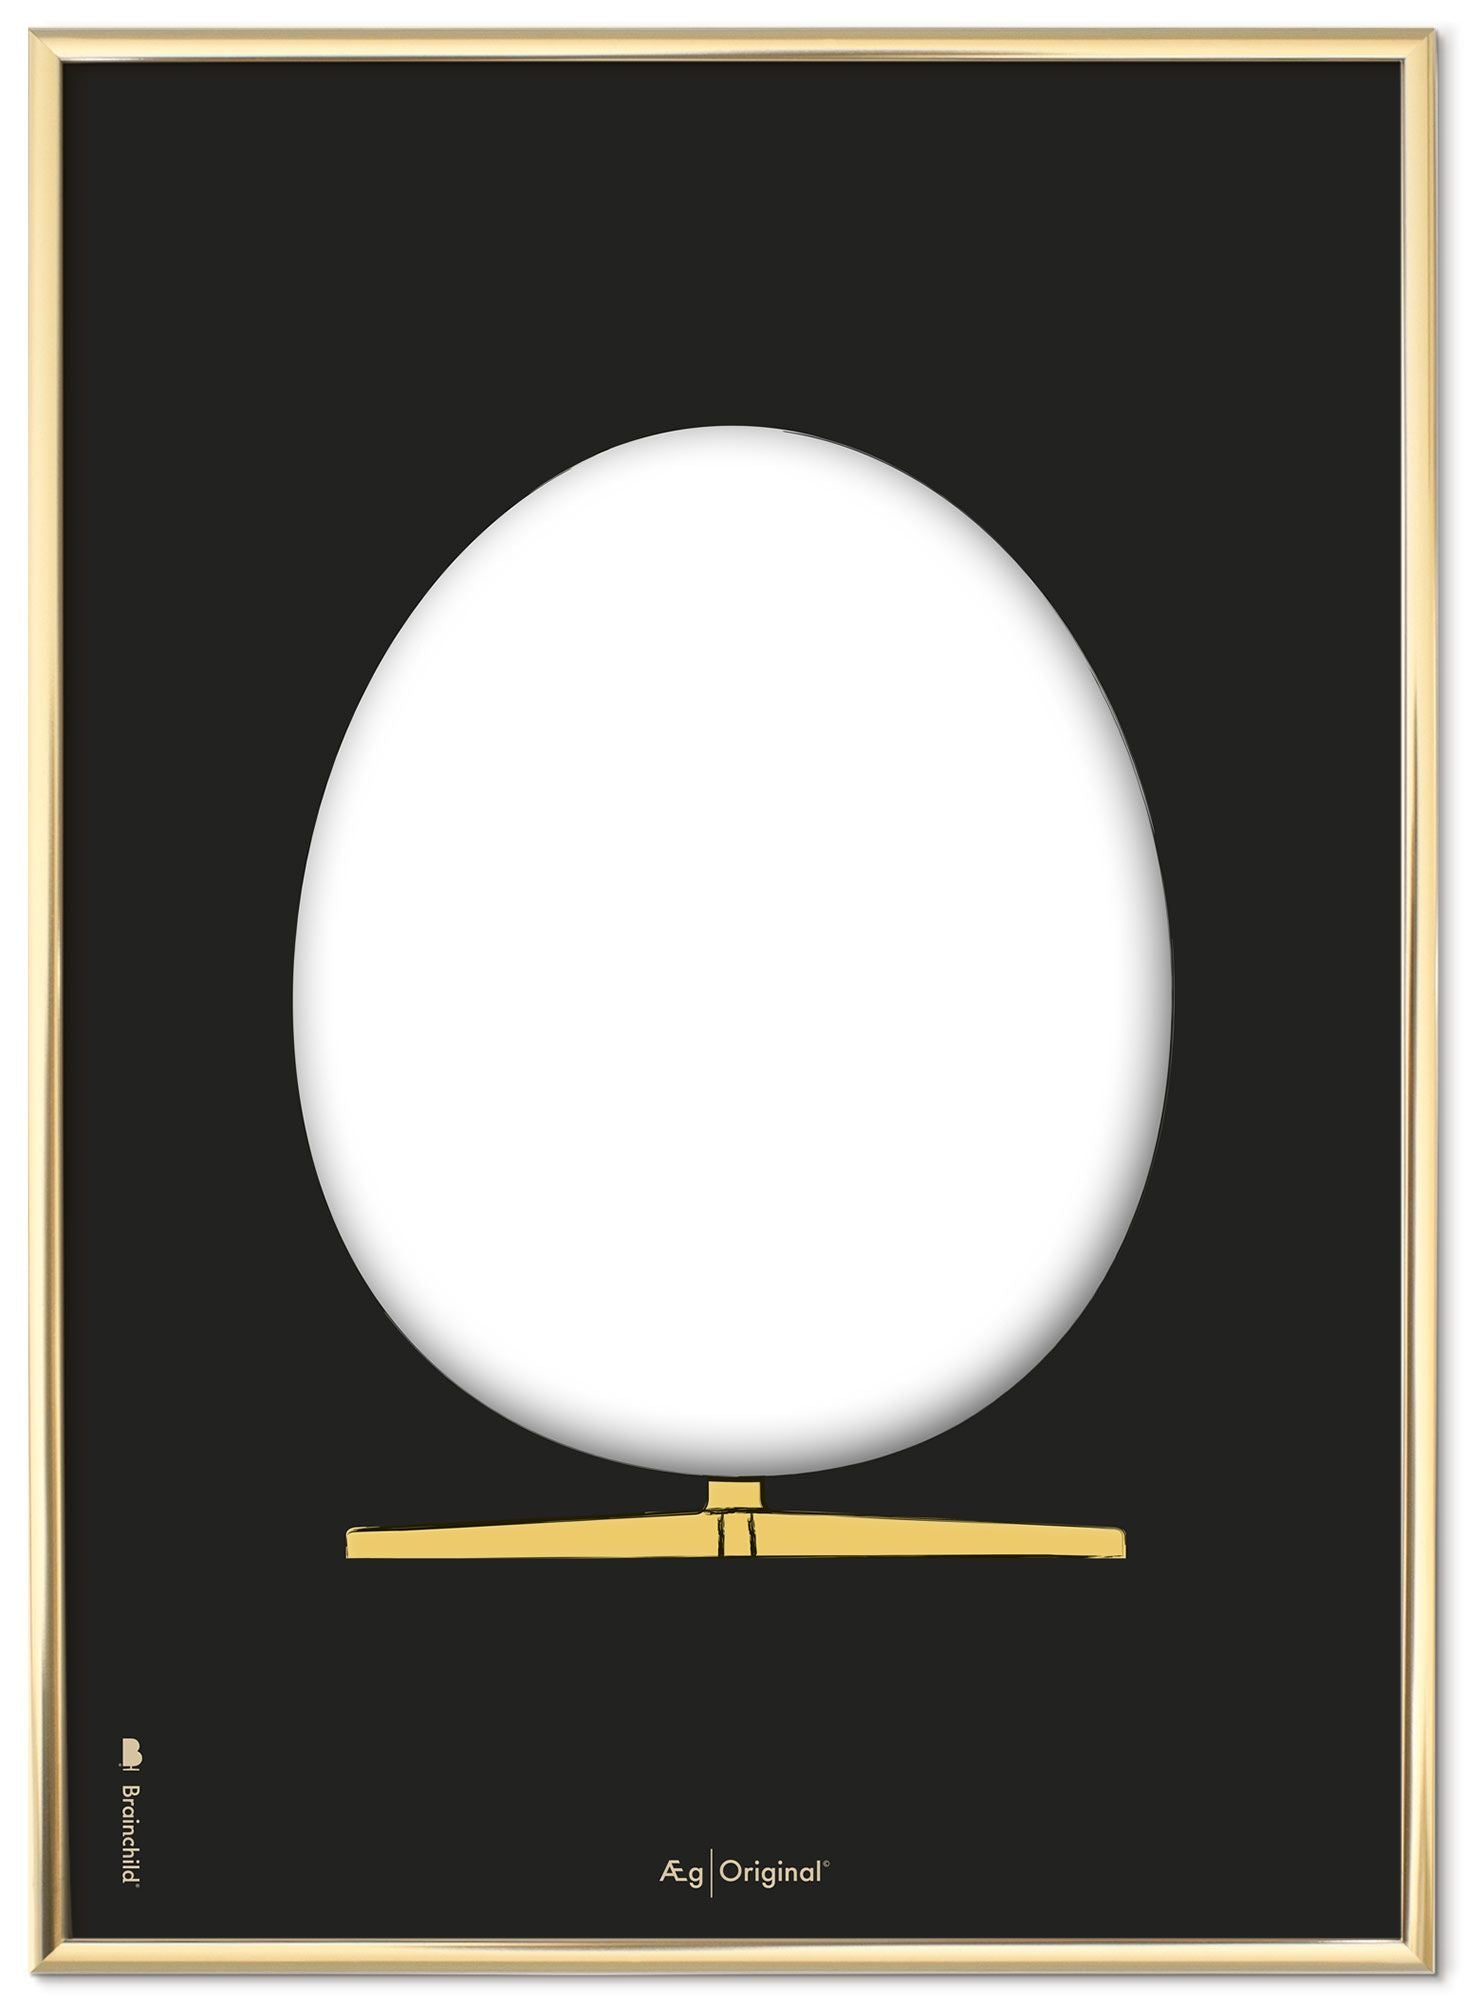 Brainchild The Egg Design Sketch Poster Frame Made Of Brass Colored Metal 50x70 Cm, Black Background